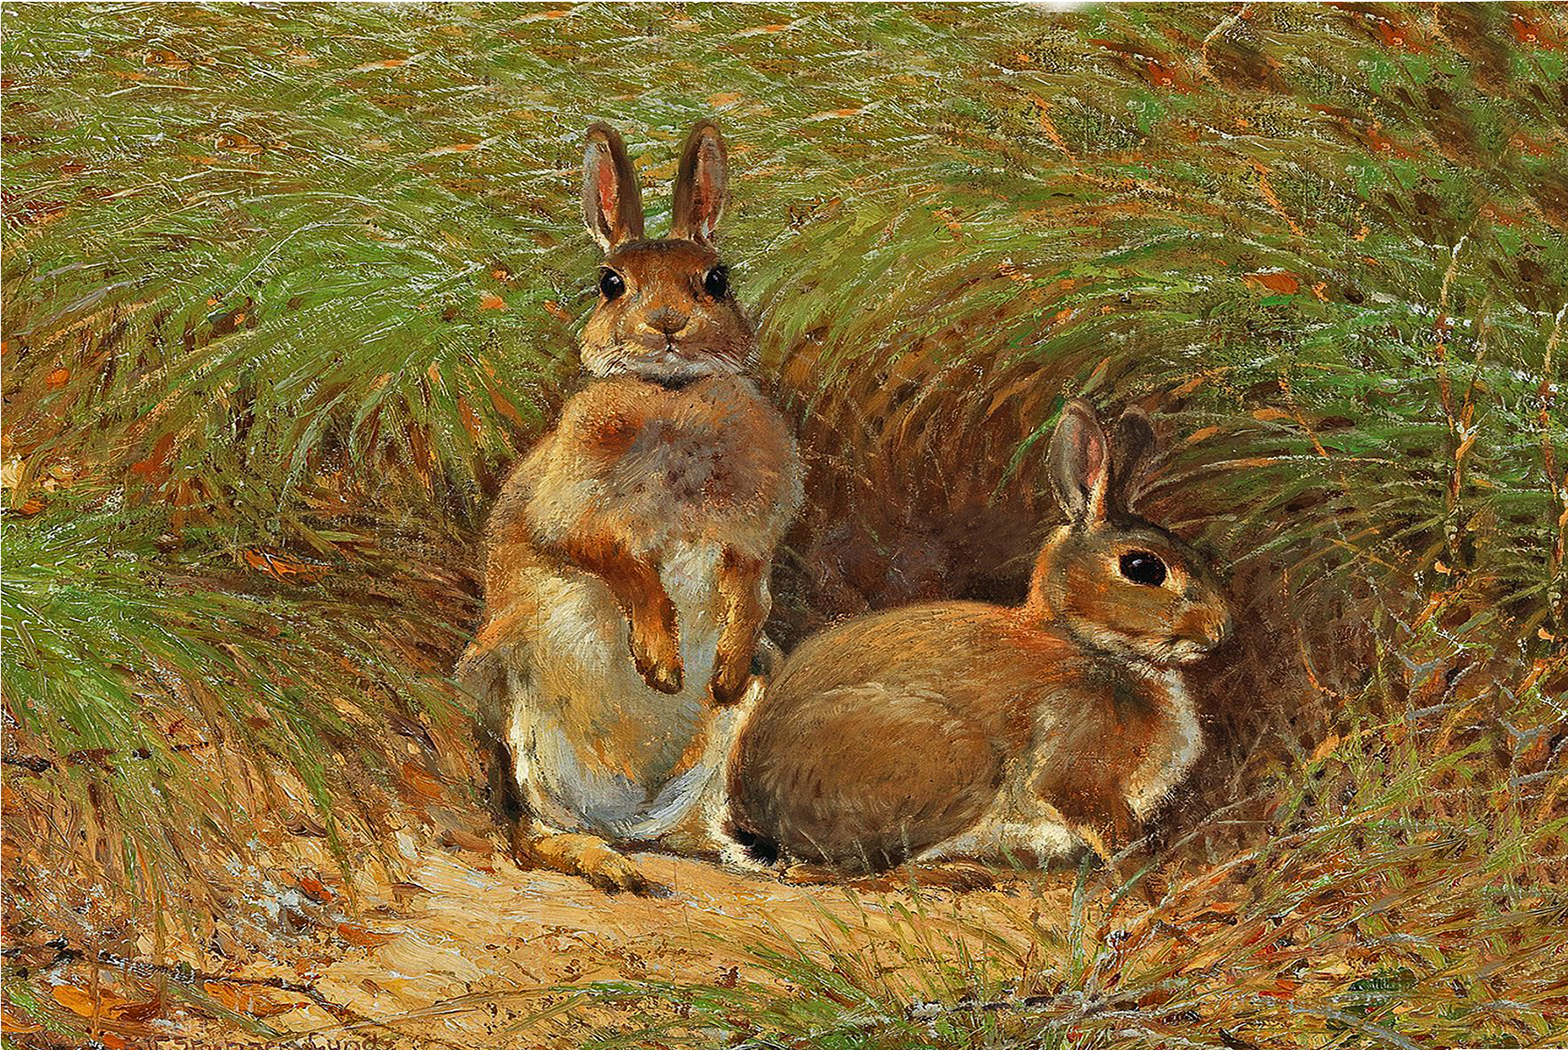 Farm/Pastoral Farm Rabbits Under Cover Oil Painting Print ...